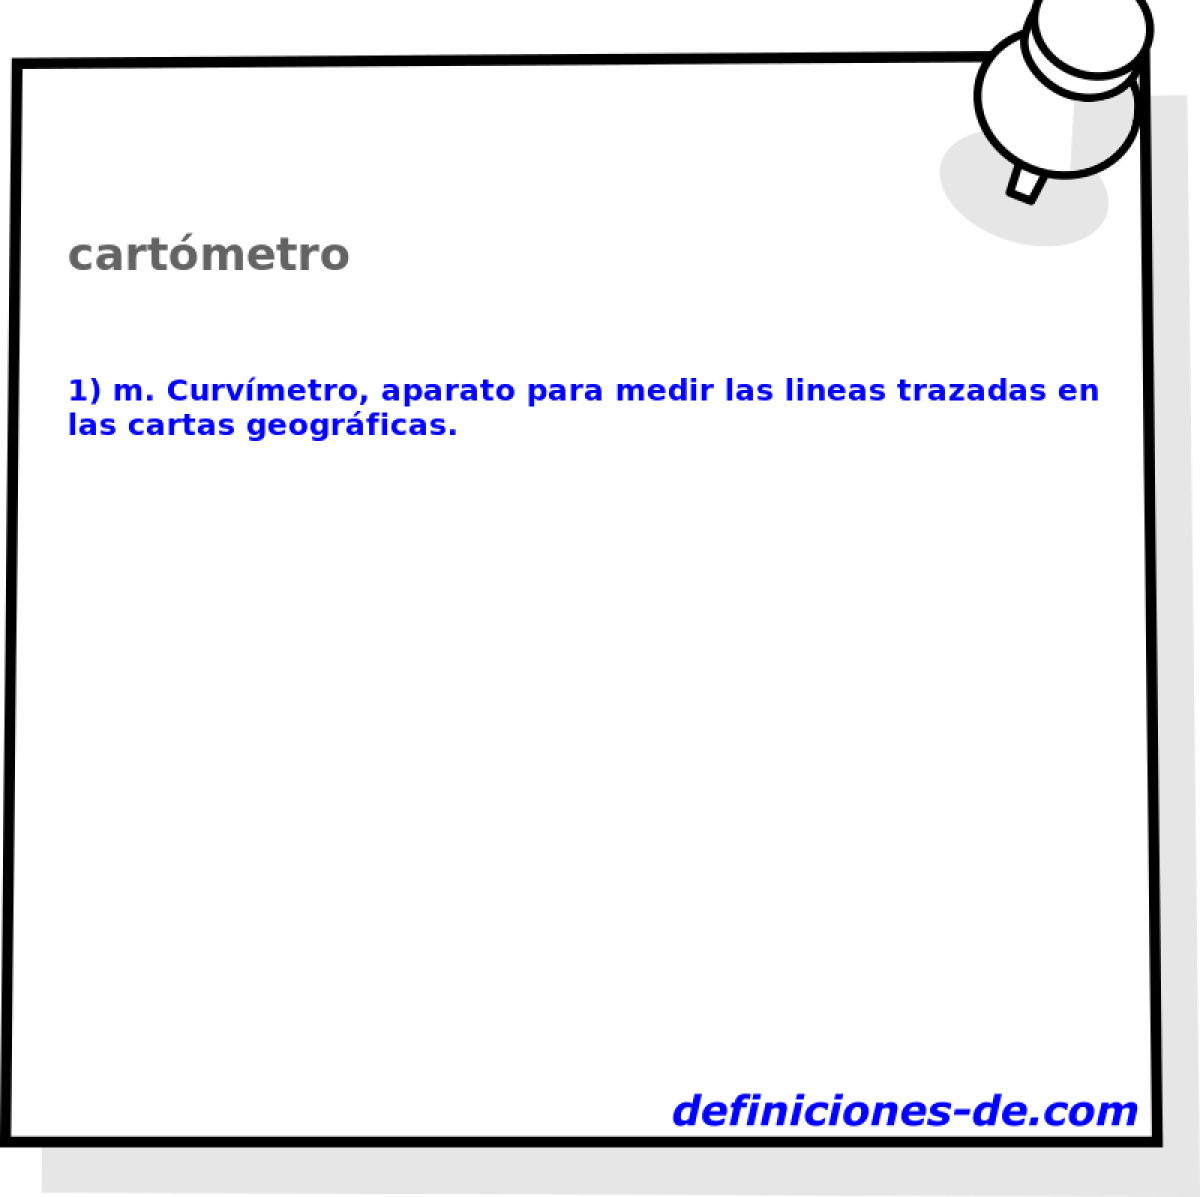 cartmetro 